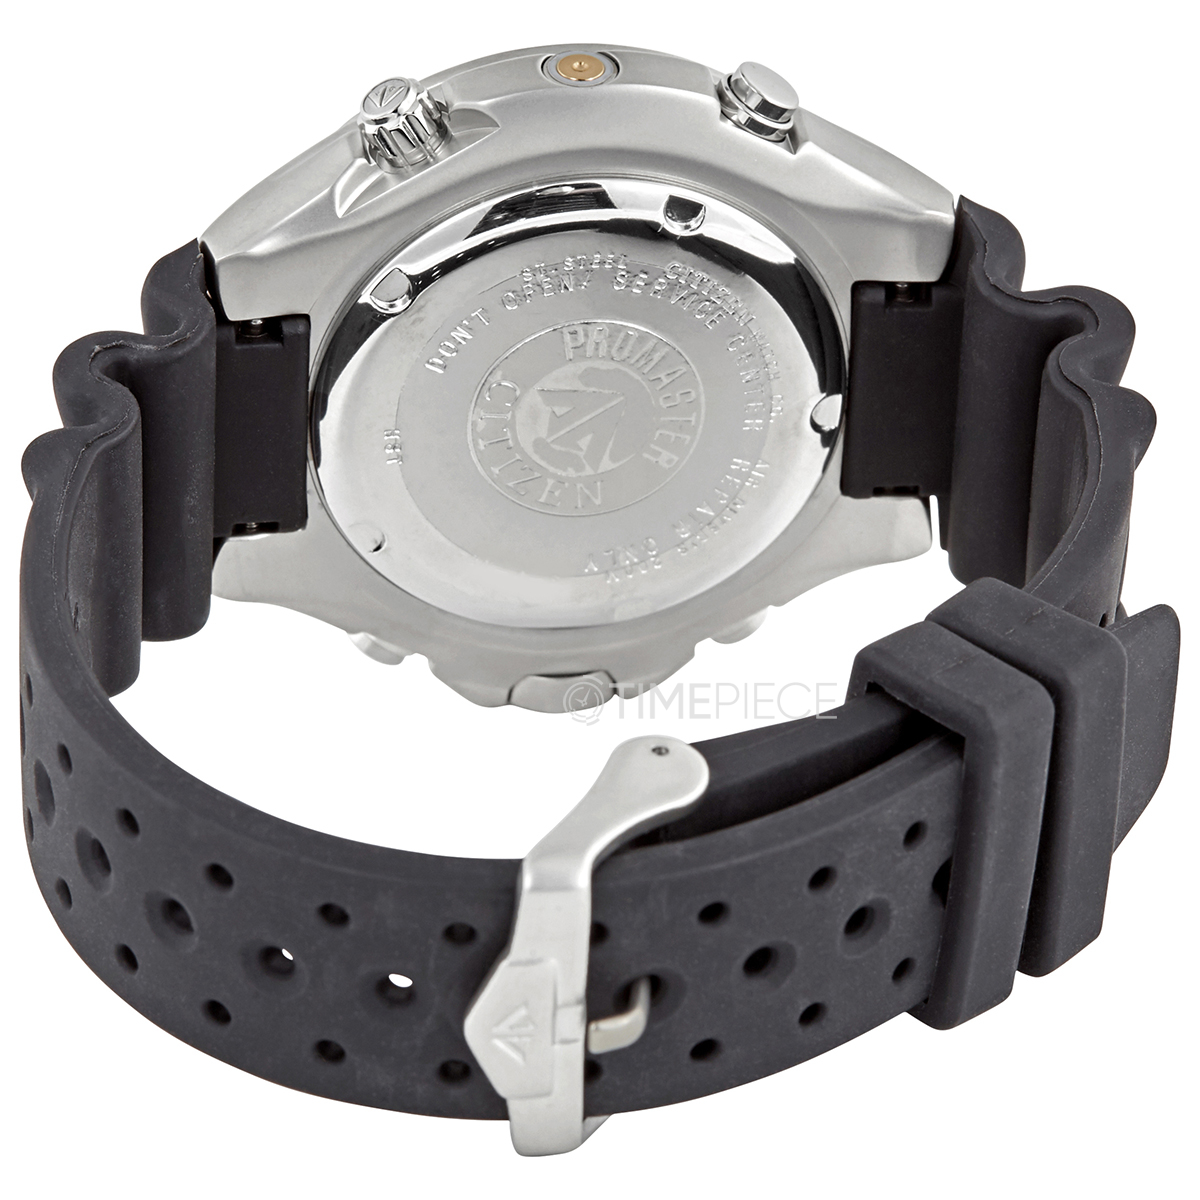 Citizen JP1060-01E Aqualand Promaster Diver Mens Chronograph Quartz Watch